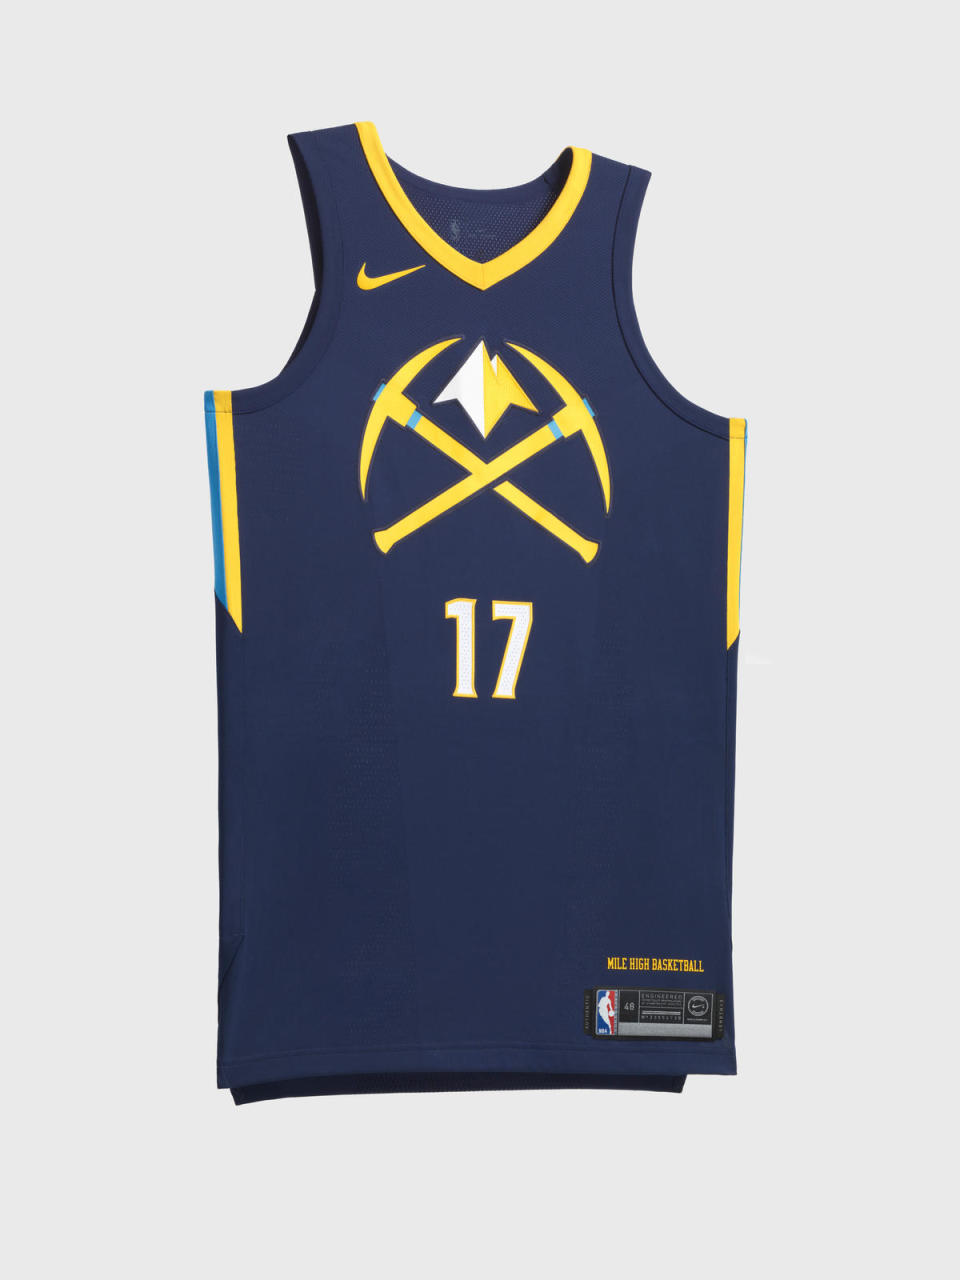 Denver Nuggets City uniform. (Nike)